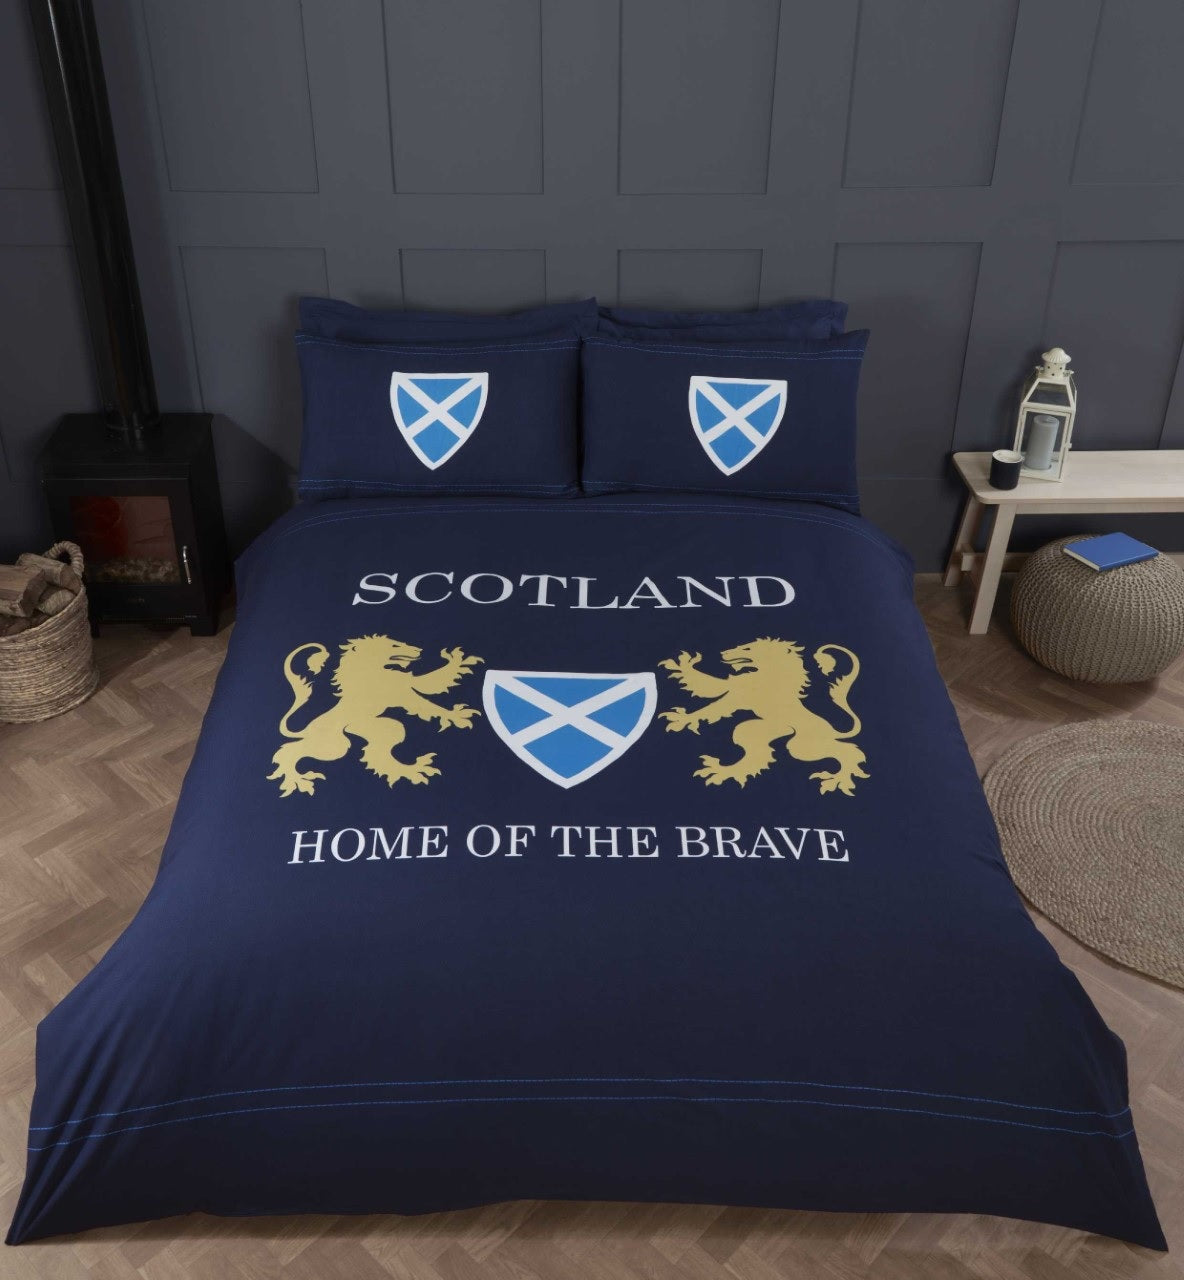 Scotland Home of the Brave Duvet Cover Set, King, Navy Blue